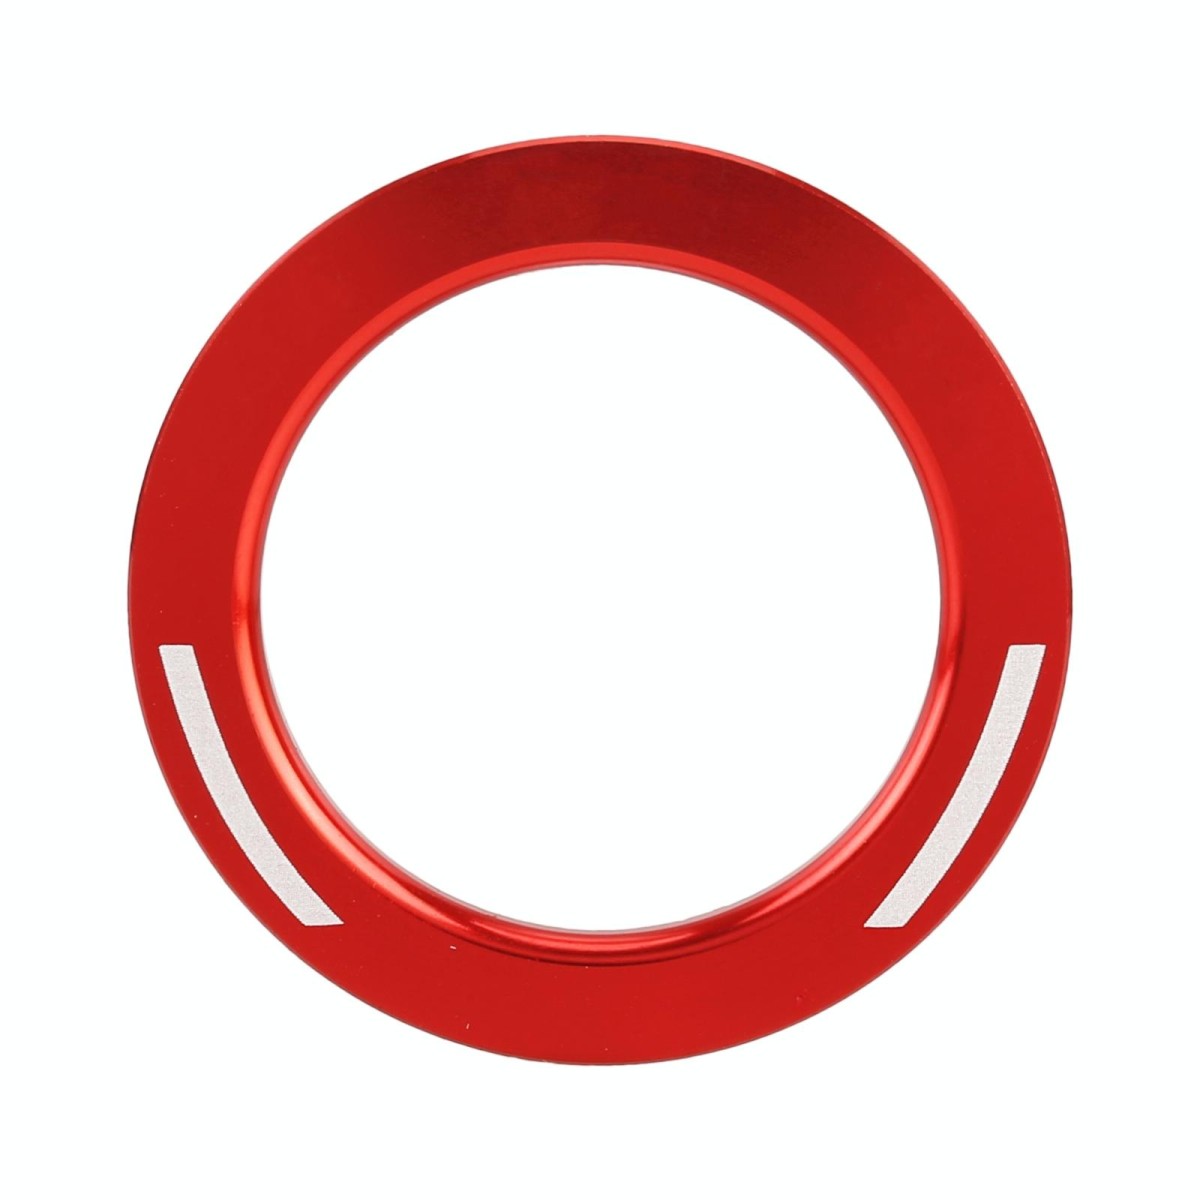 For Honda Metal Ignition Key Ring, Diameter: 3.9cm (Red)